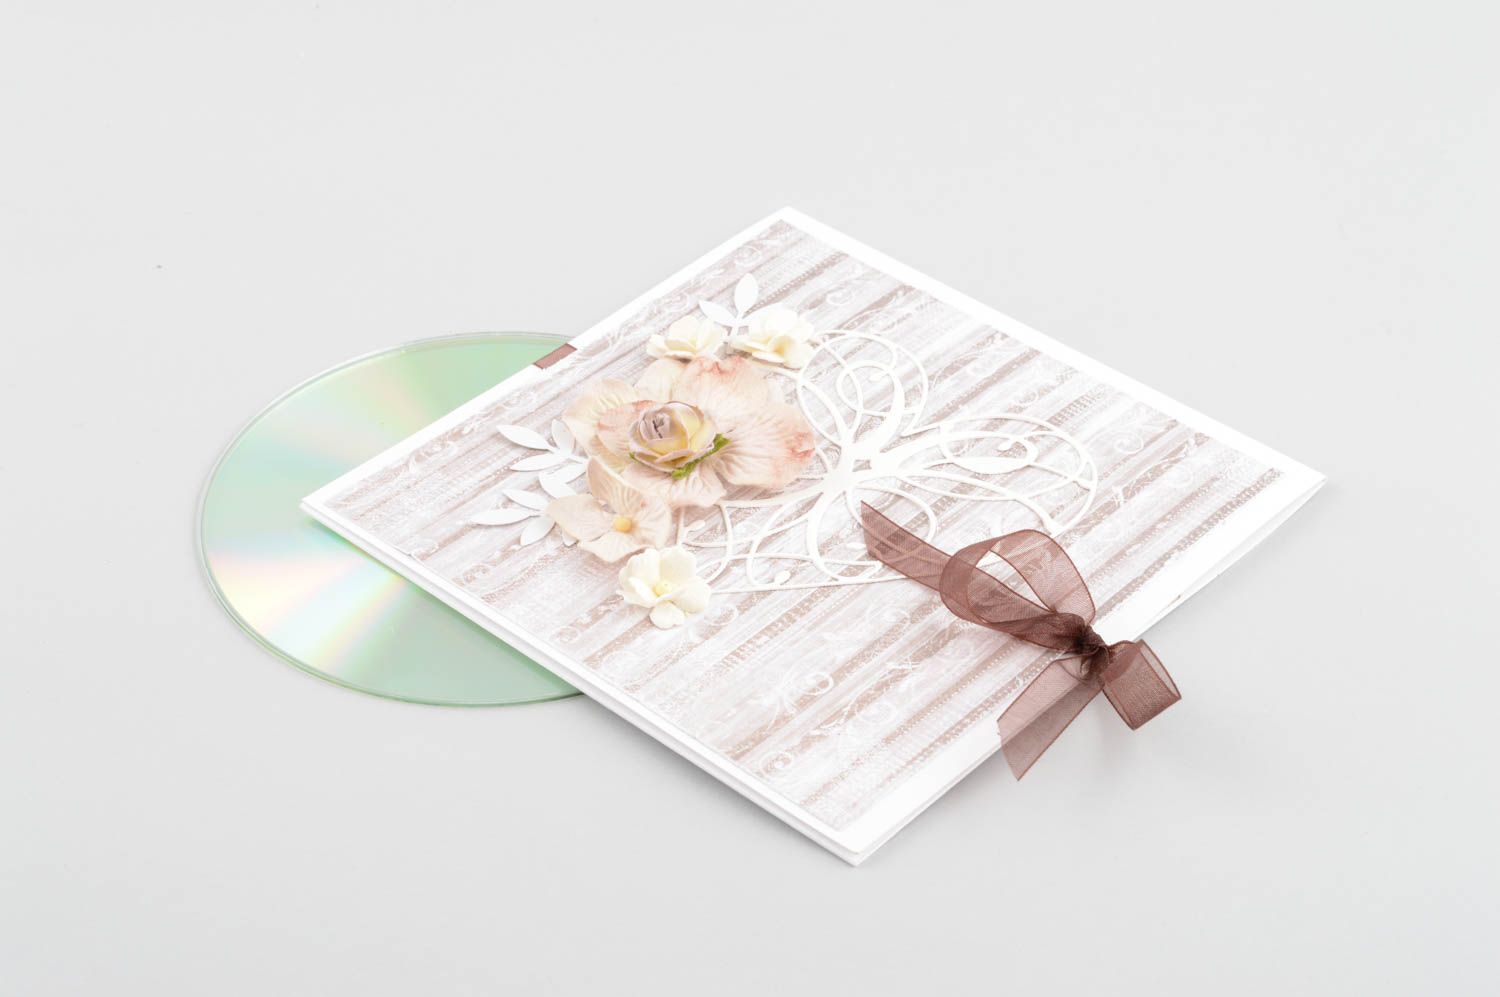 Handmade CD Hülle aus Papier kreatives Geschenk CD Aufbewahrung mit Blumen foto 2